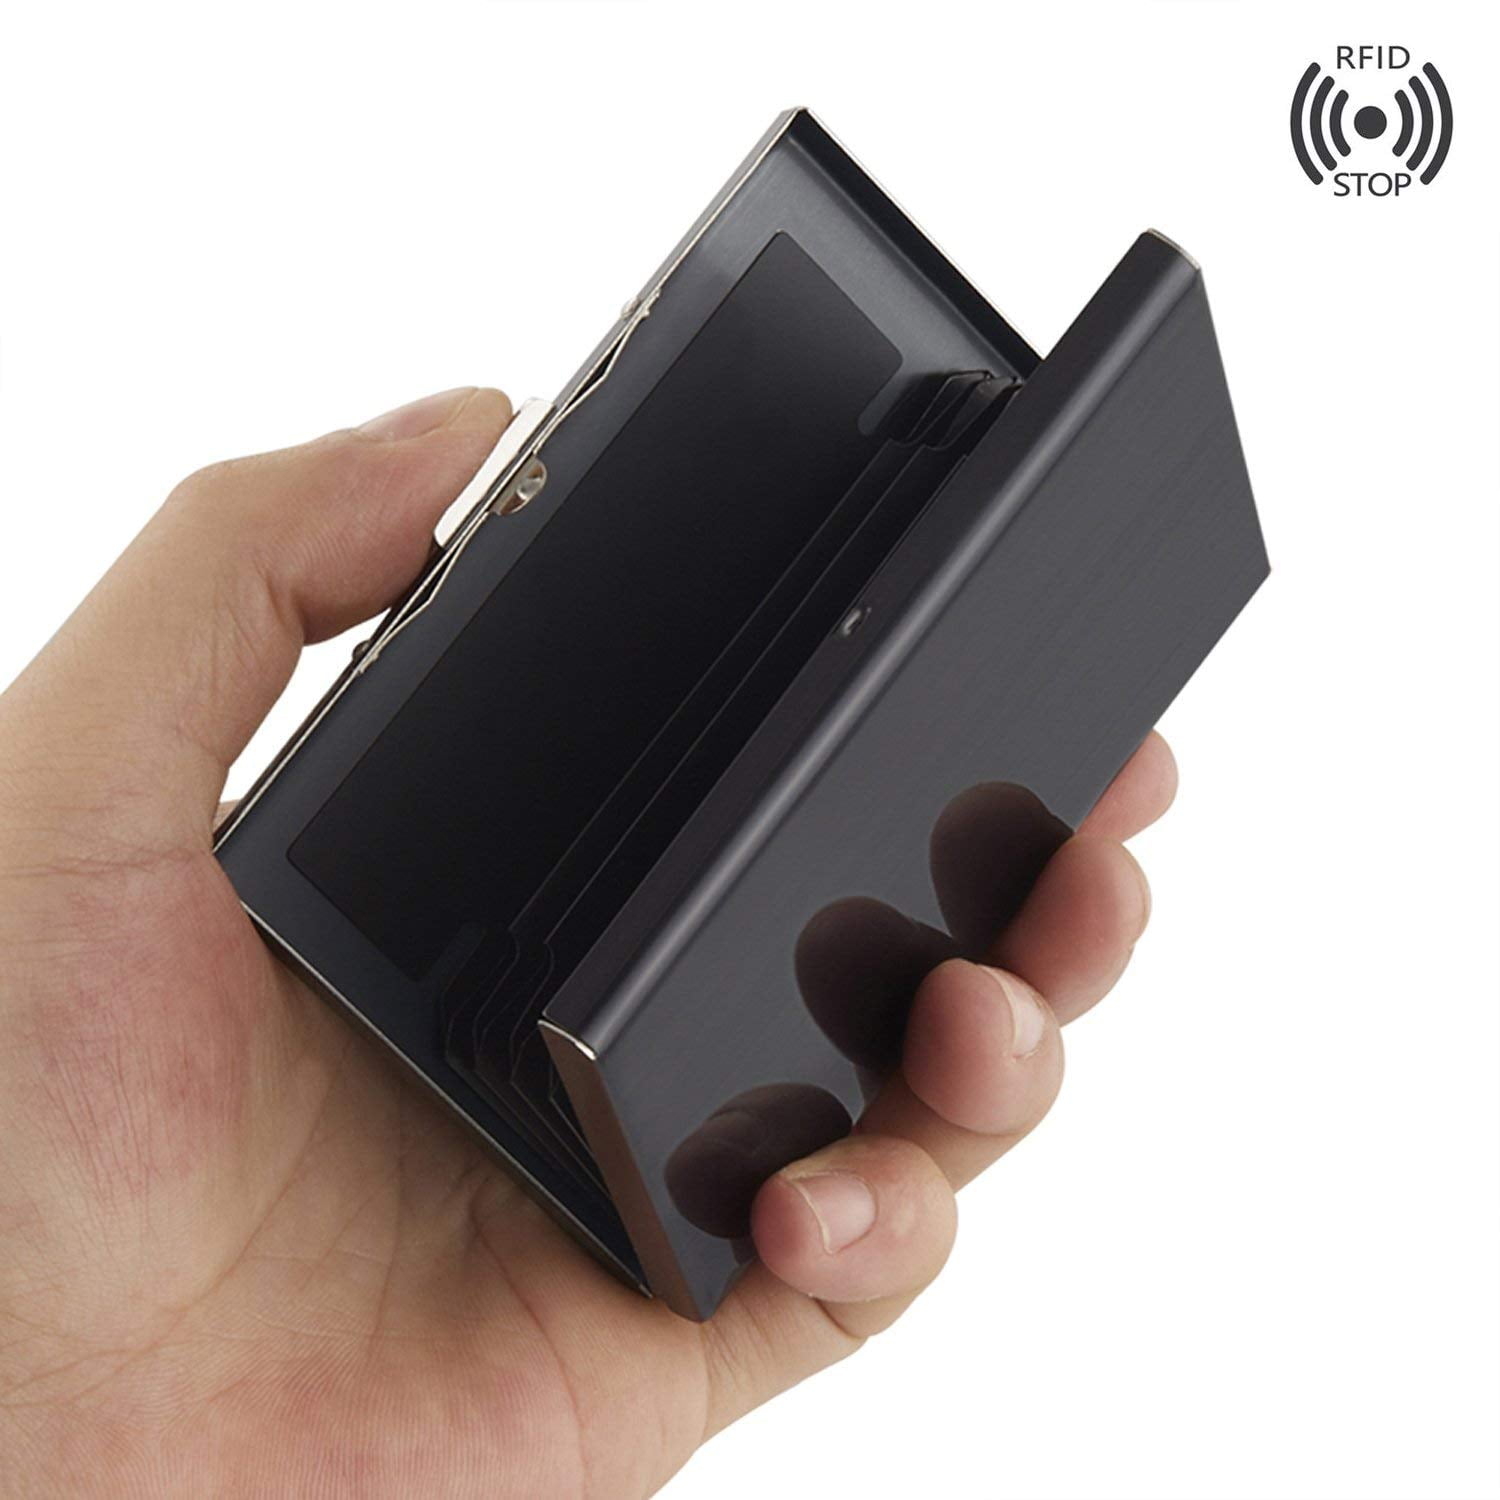 Mignova Men's Slim Minimalist Front Pocket Wallet